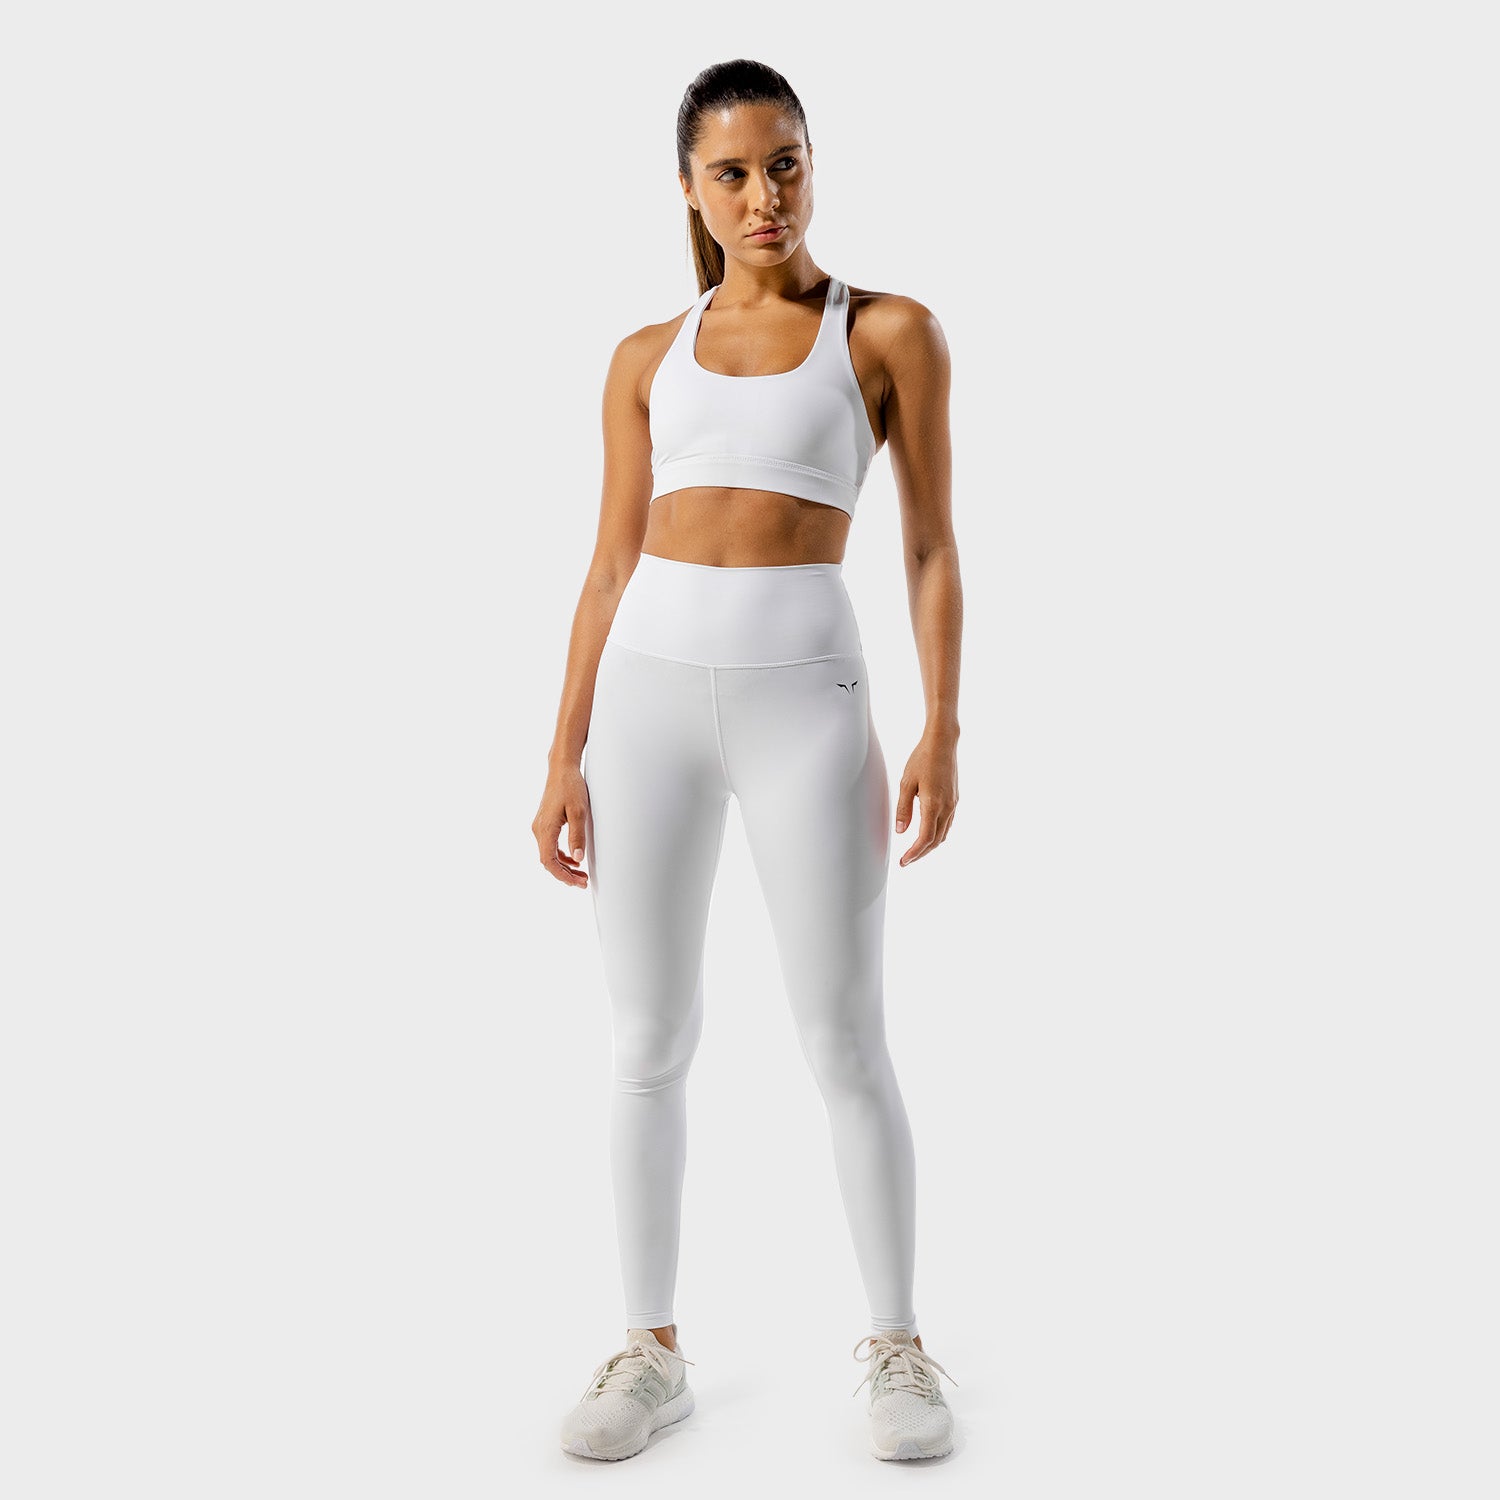 squatwolf-gym-leggings-for-women-core-agile-leggings-white-workout-clothes